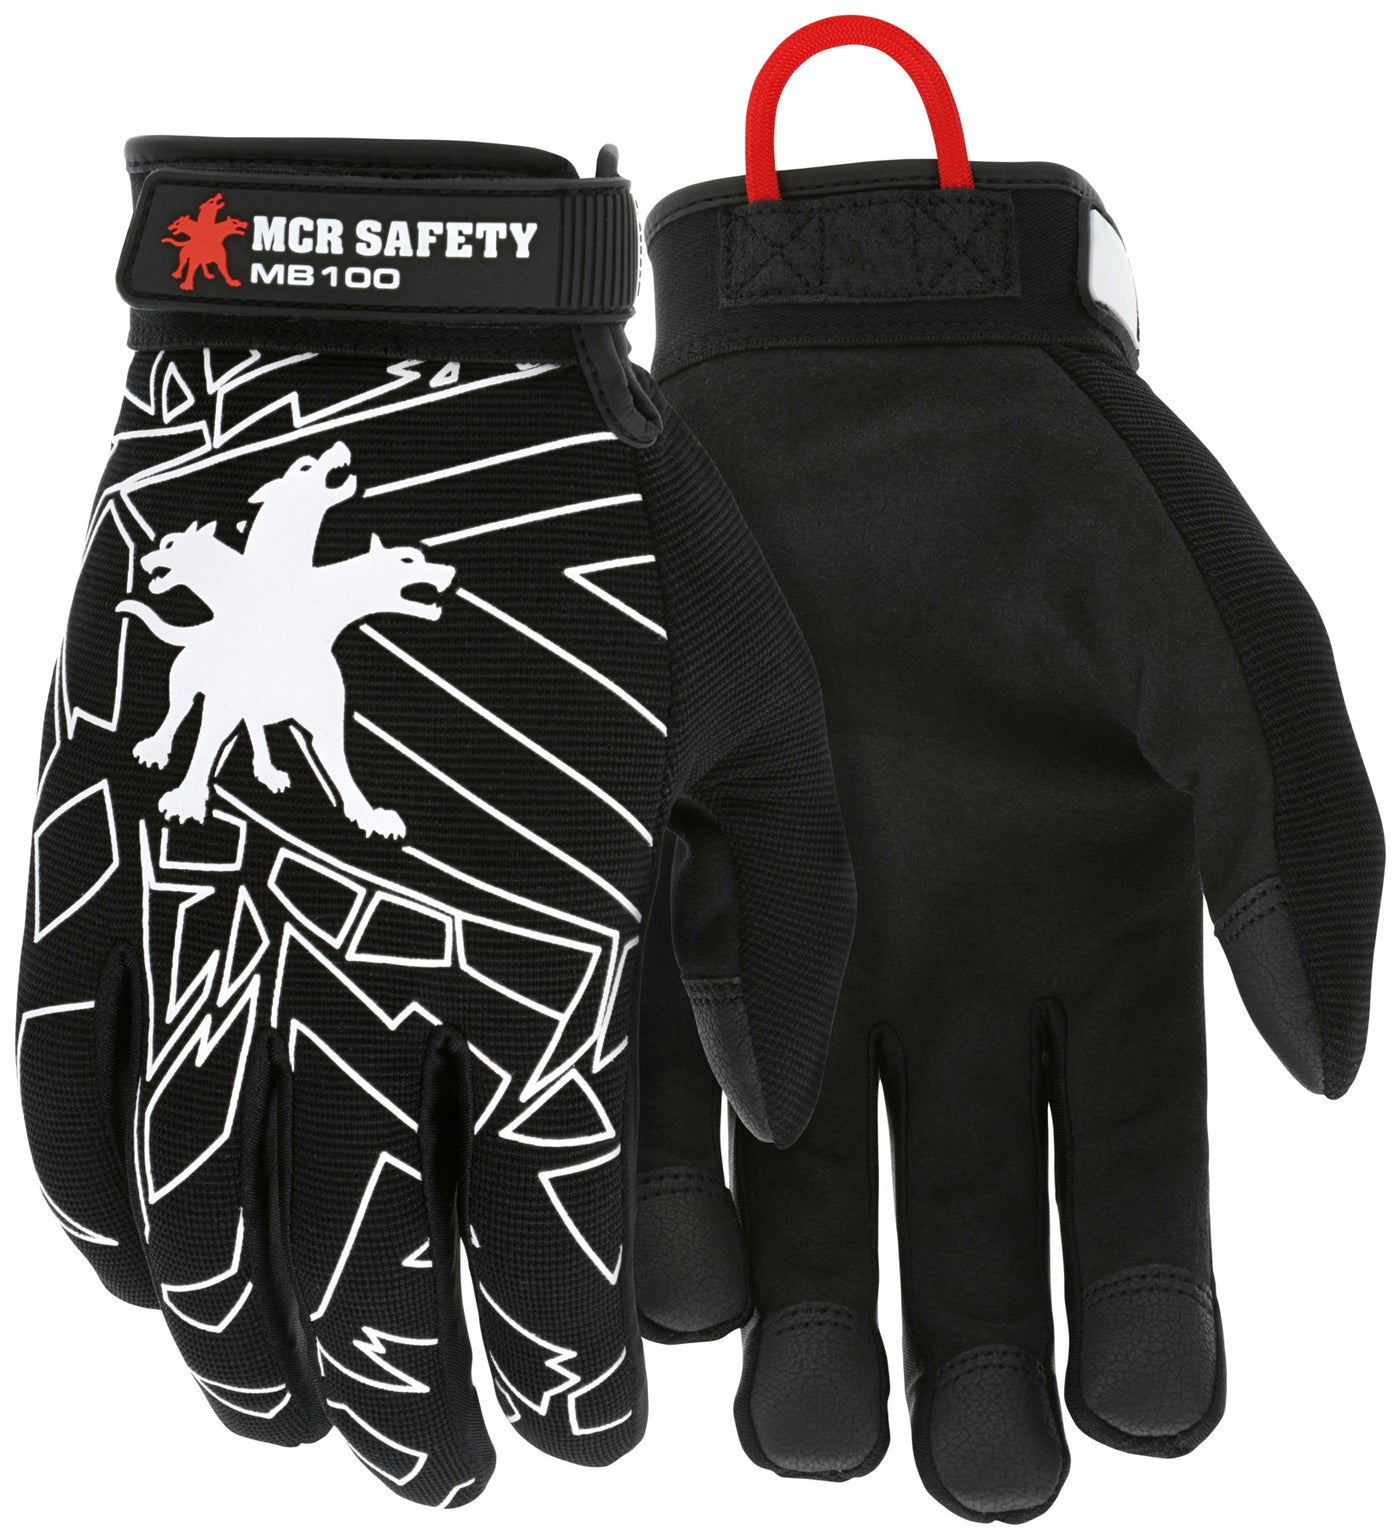 MB100 - MCR Safety Mechanics Gloves